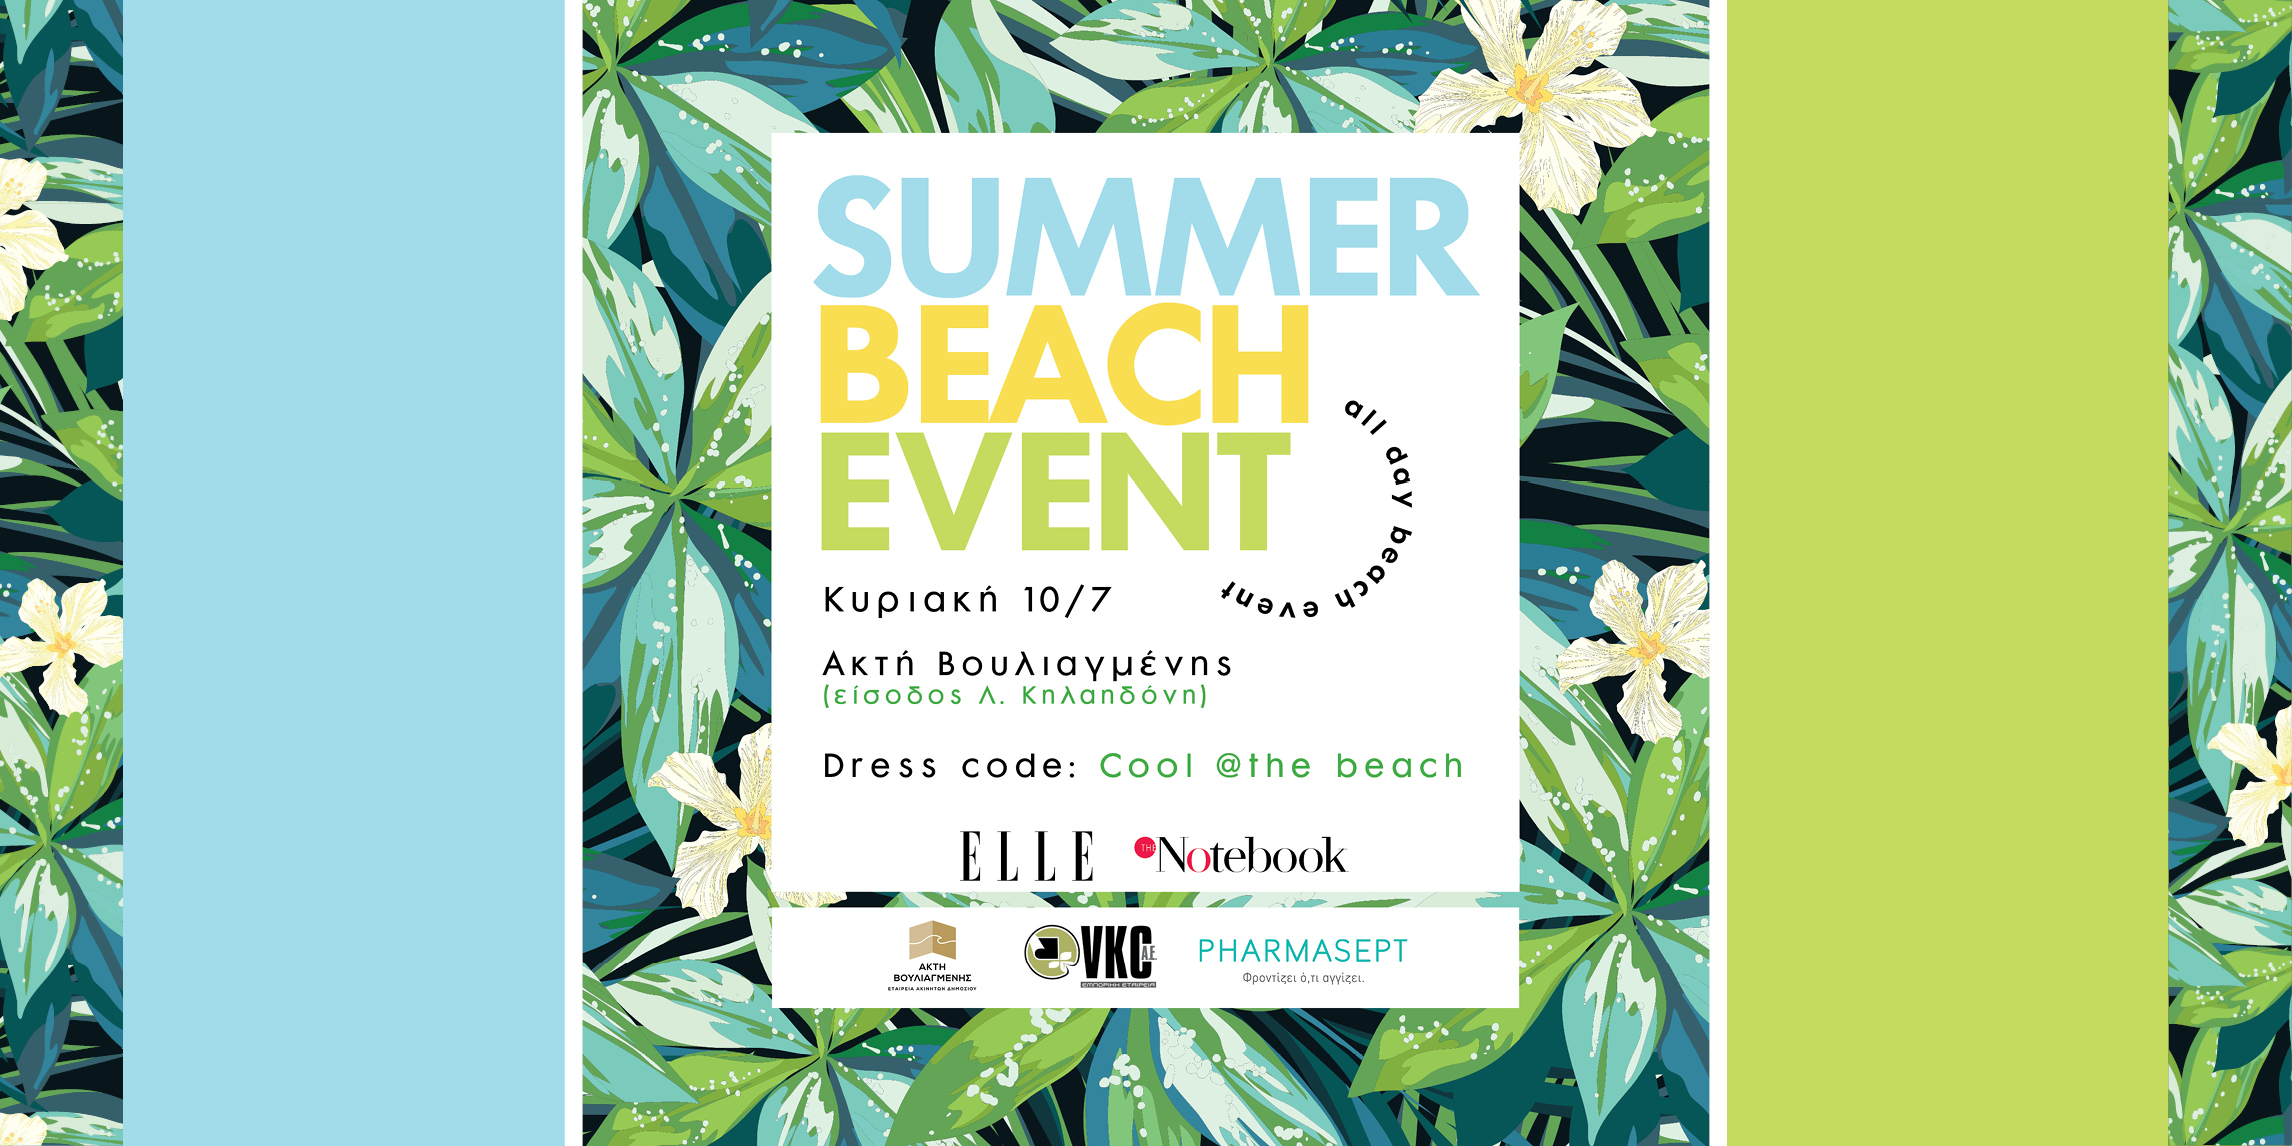 Summer Beach Event @Ακτή Βουλιαγμένης: Σας περιμένουμε με καλοκαιρινή διάθεση και πολλά δώρα!